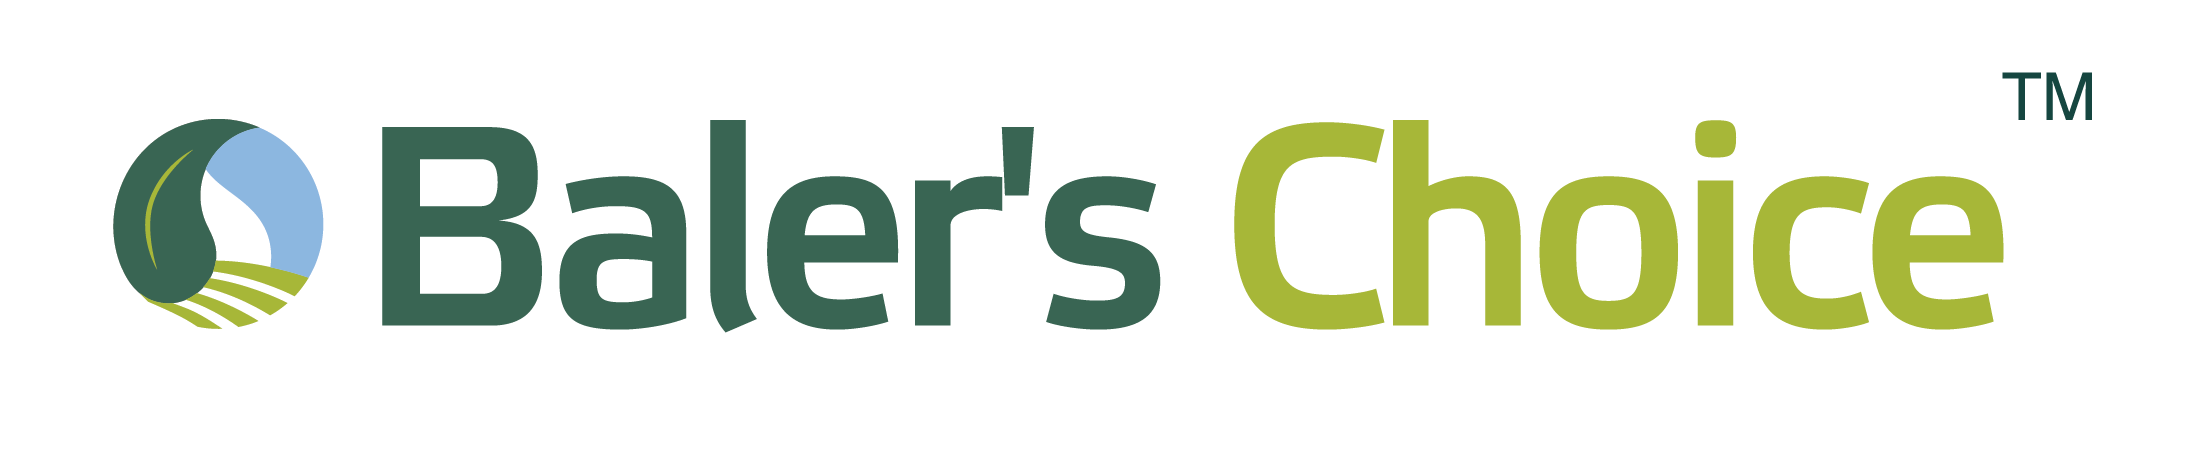 Balers Choice Hay Preservative Logo